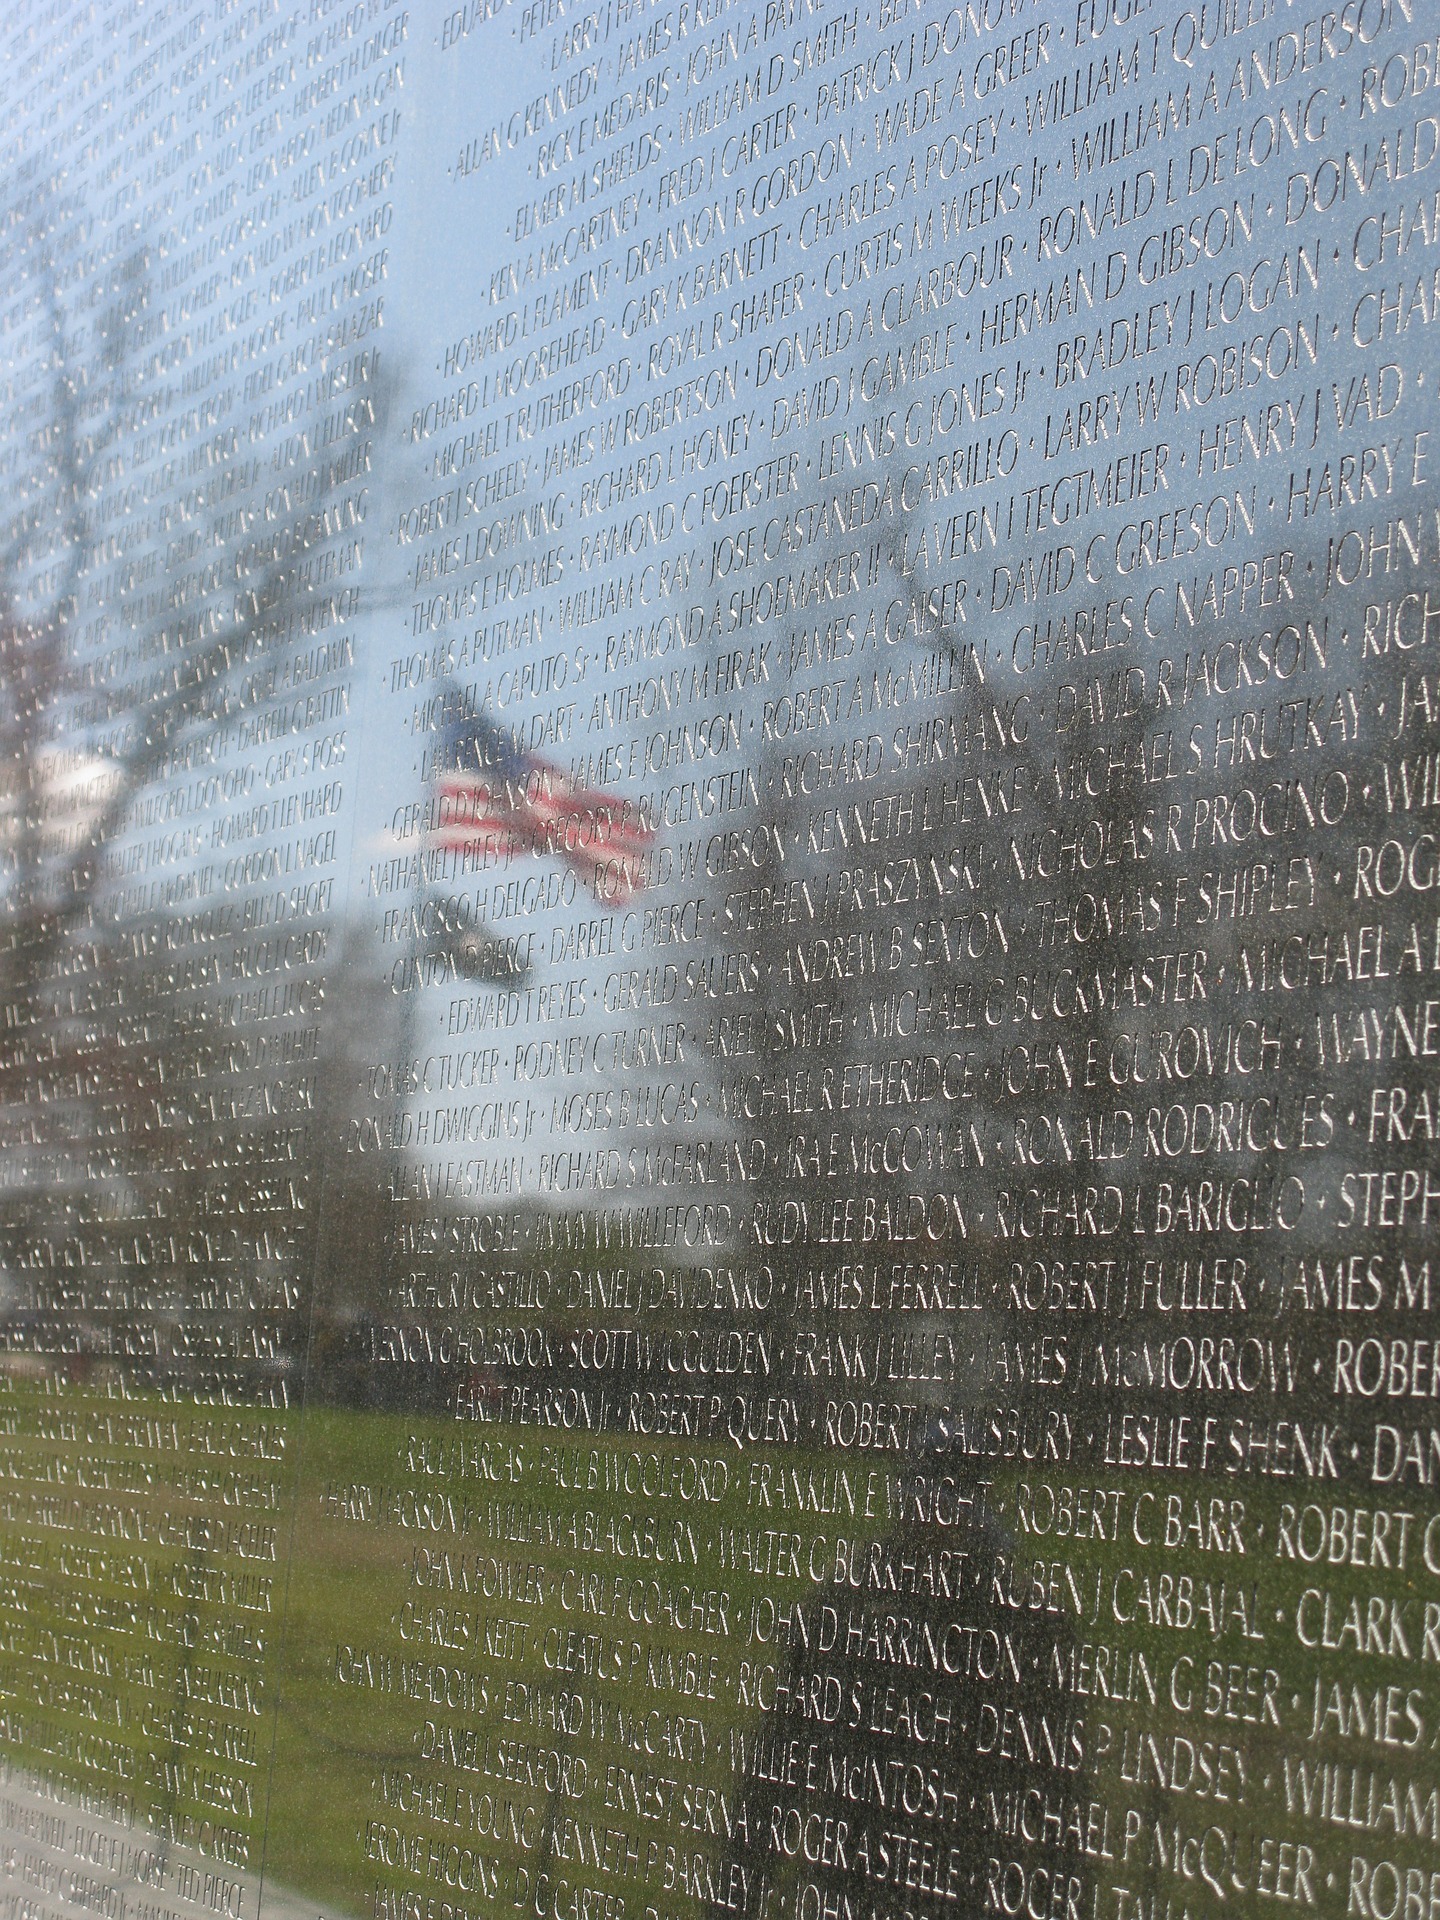 Vietnam-veterans-memorial